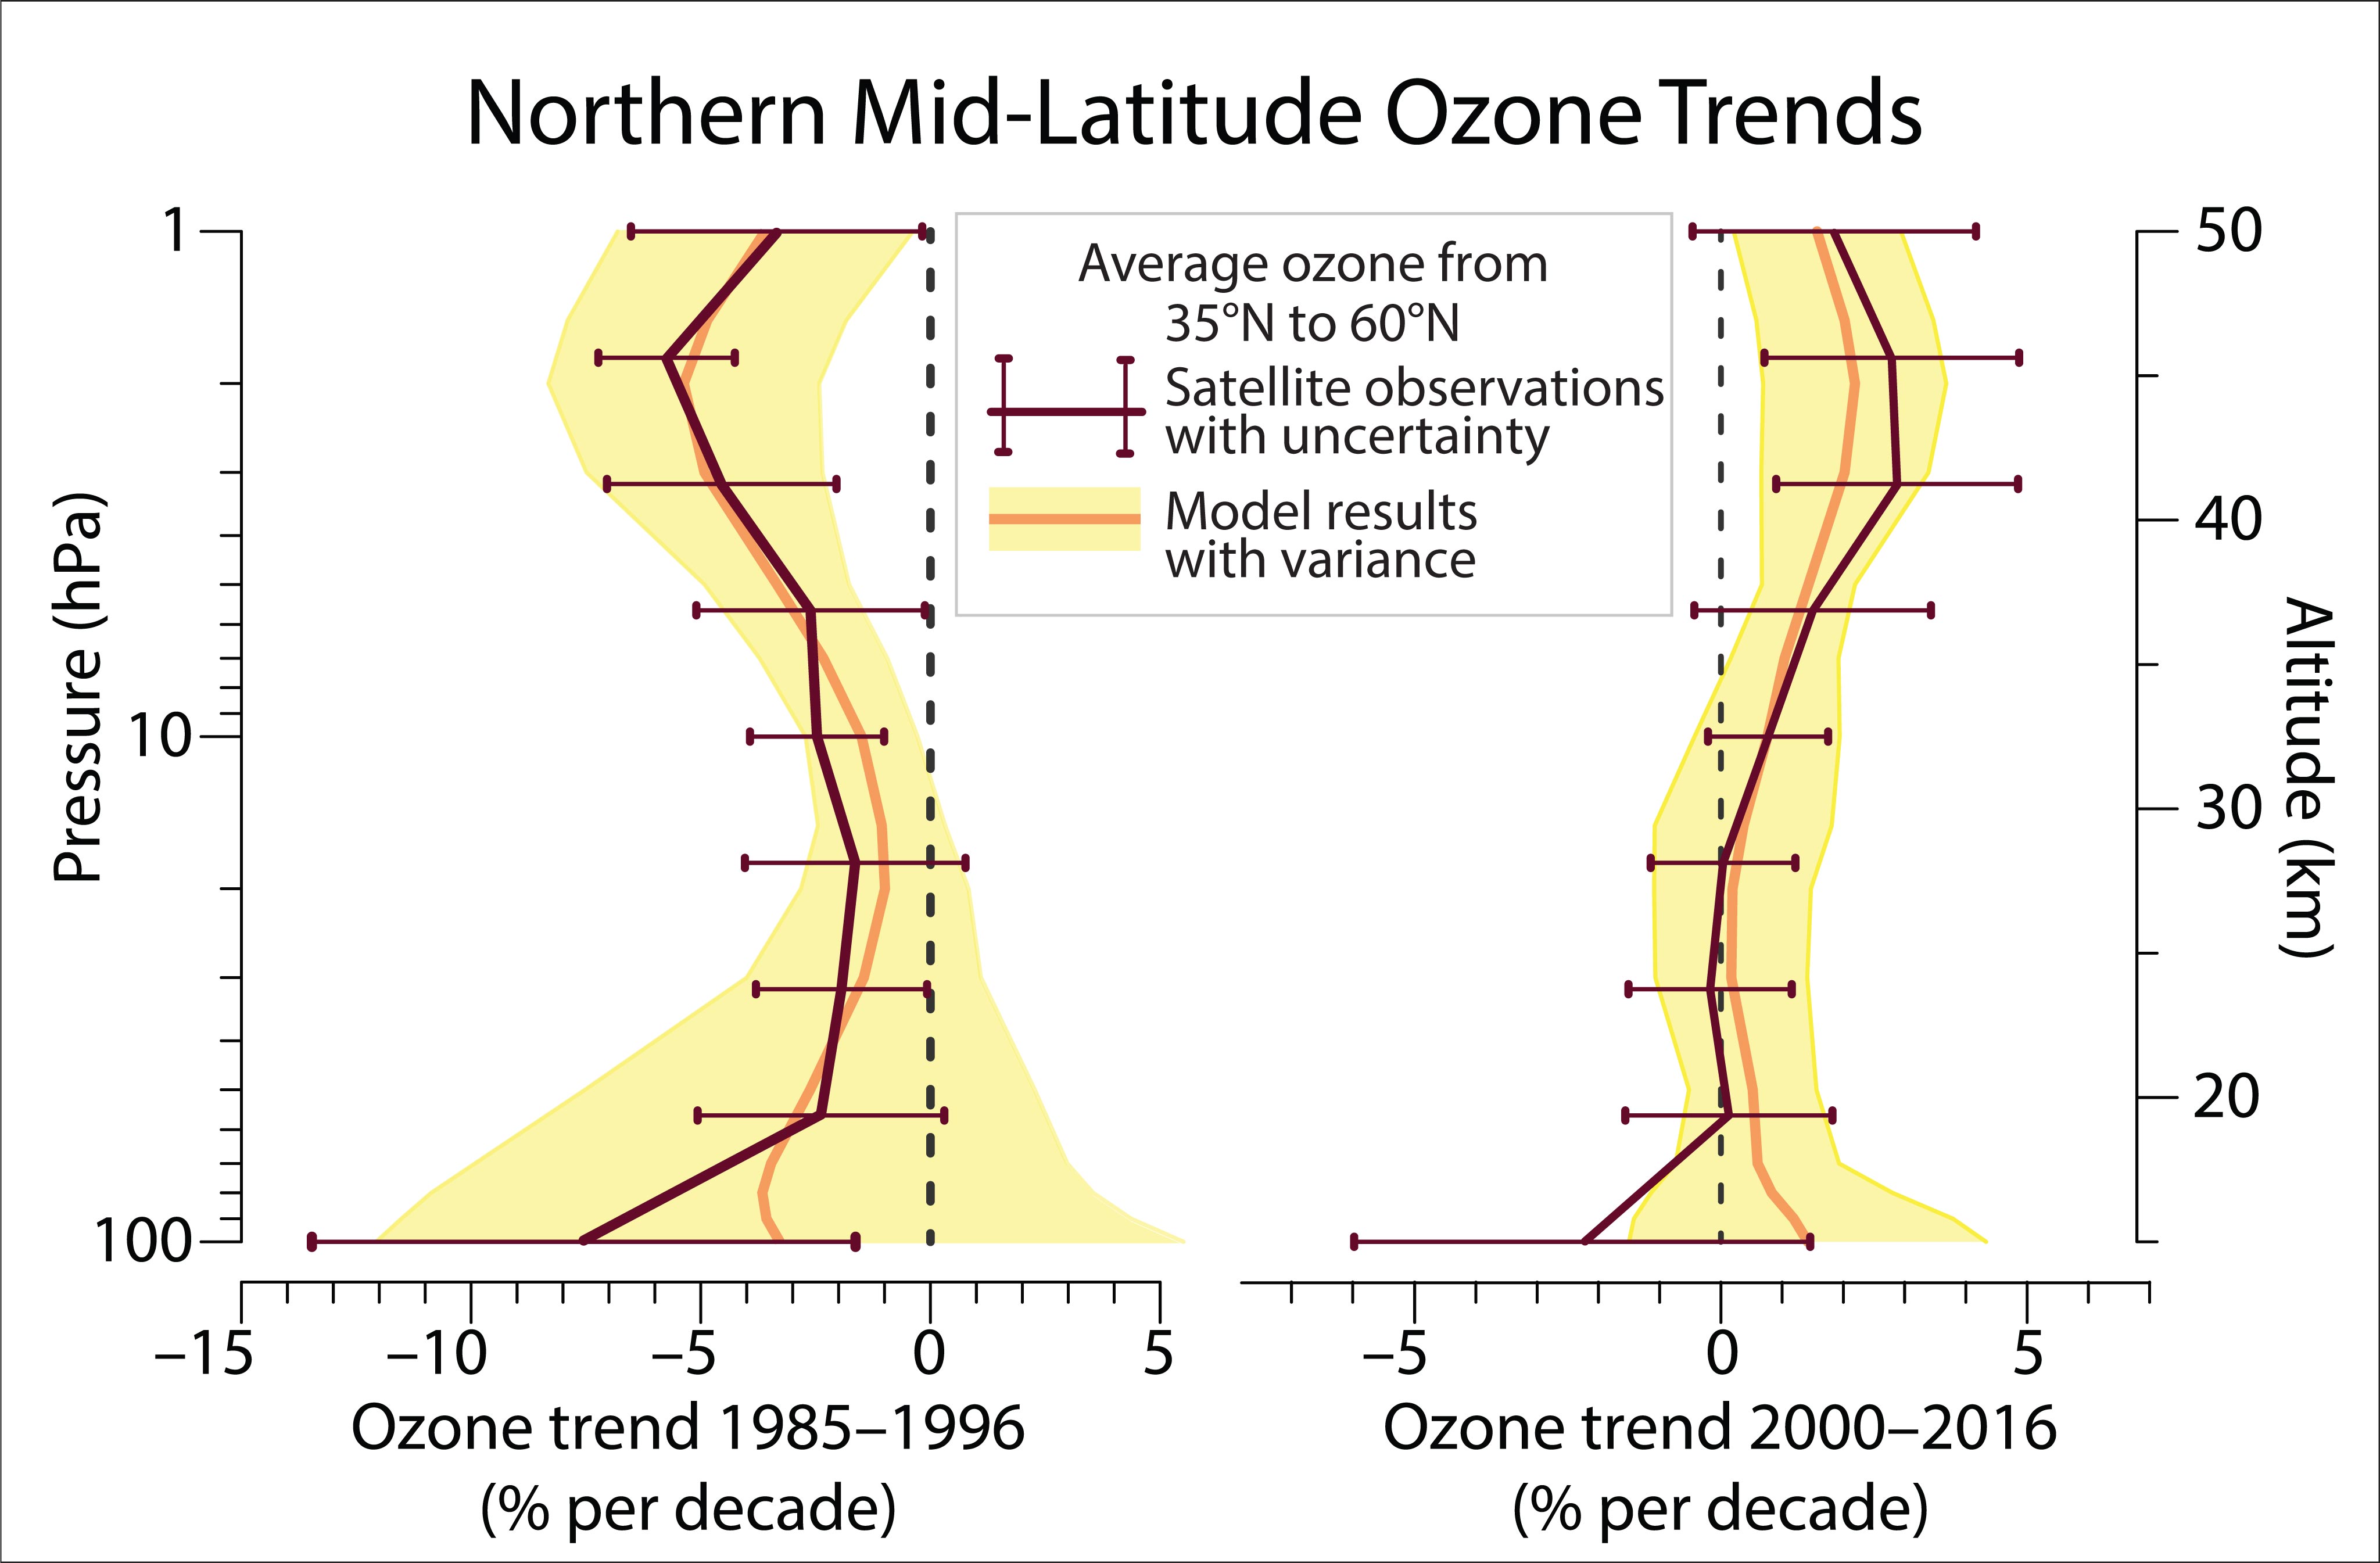 Northern Mid-Latitude Ozone Trends